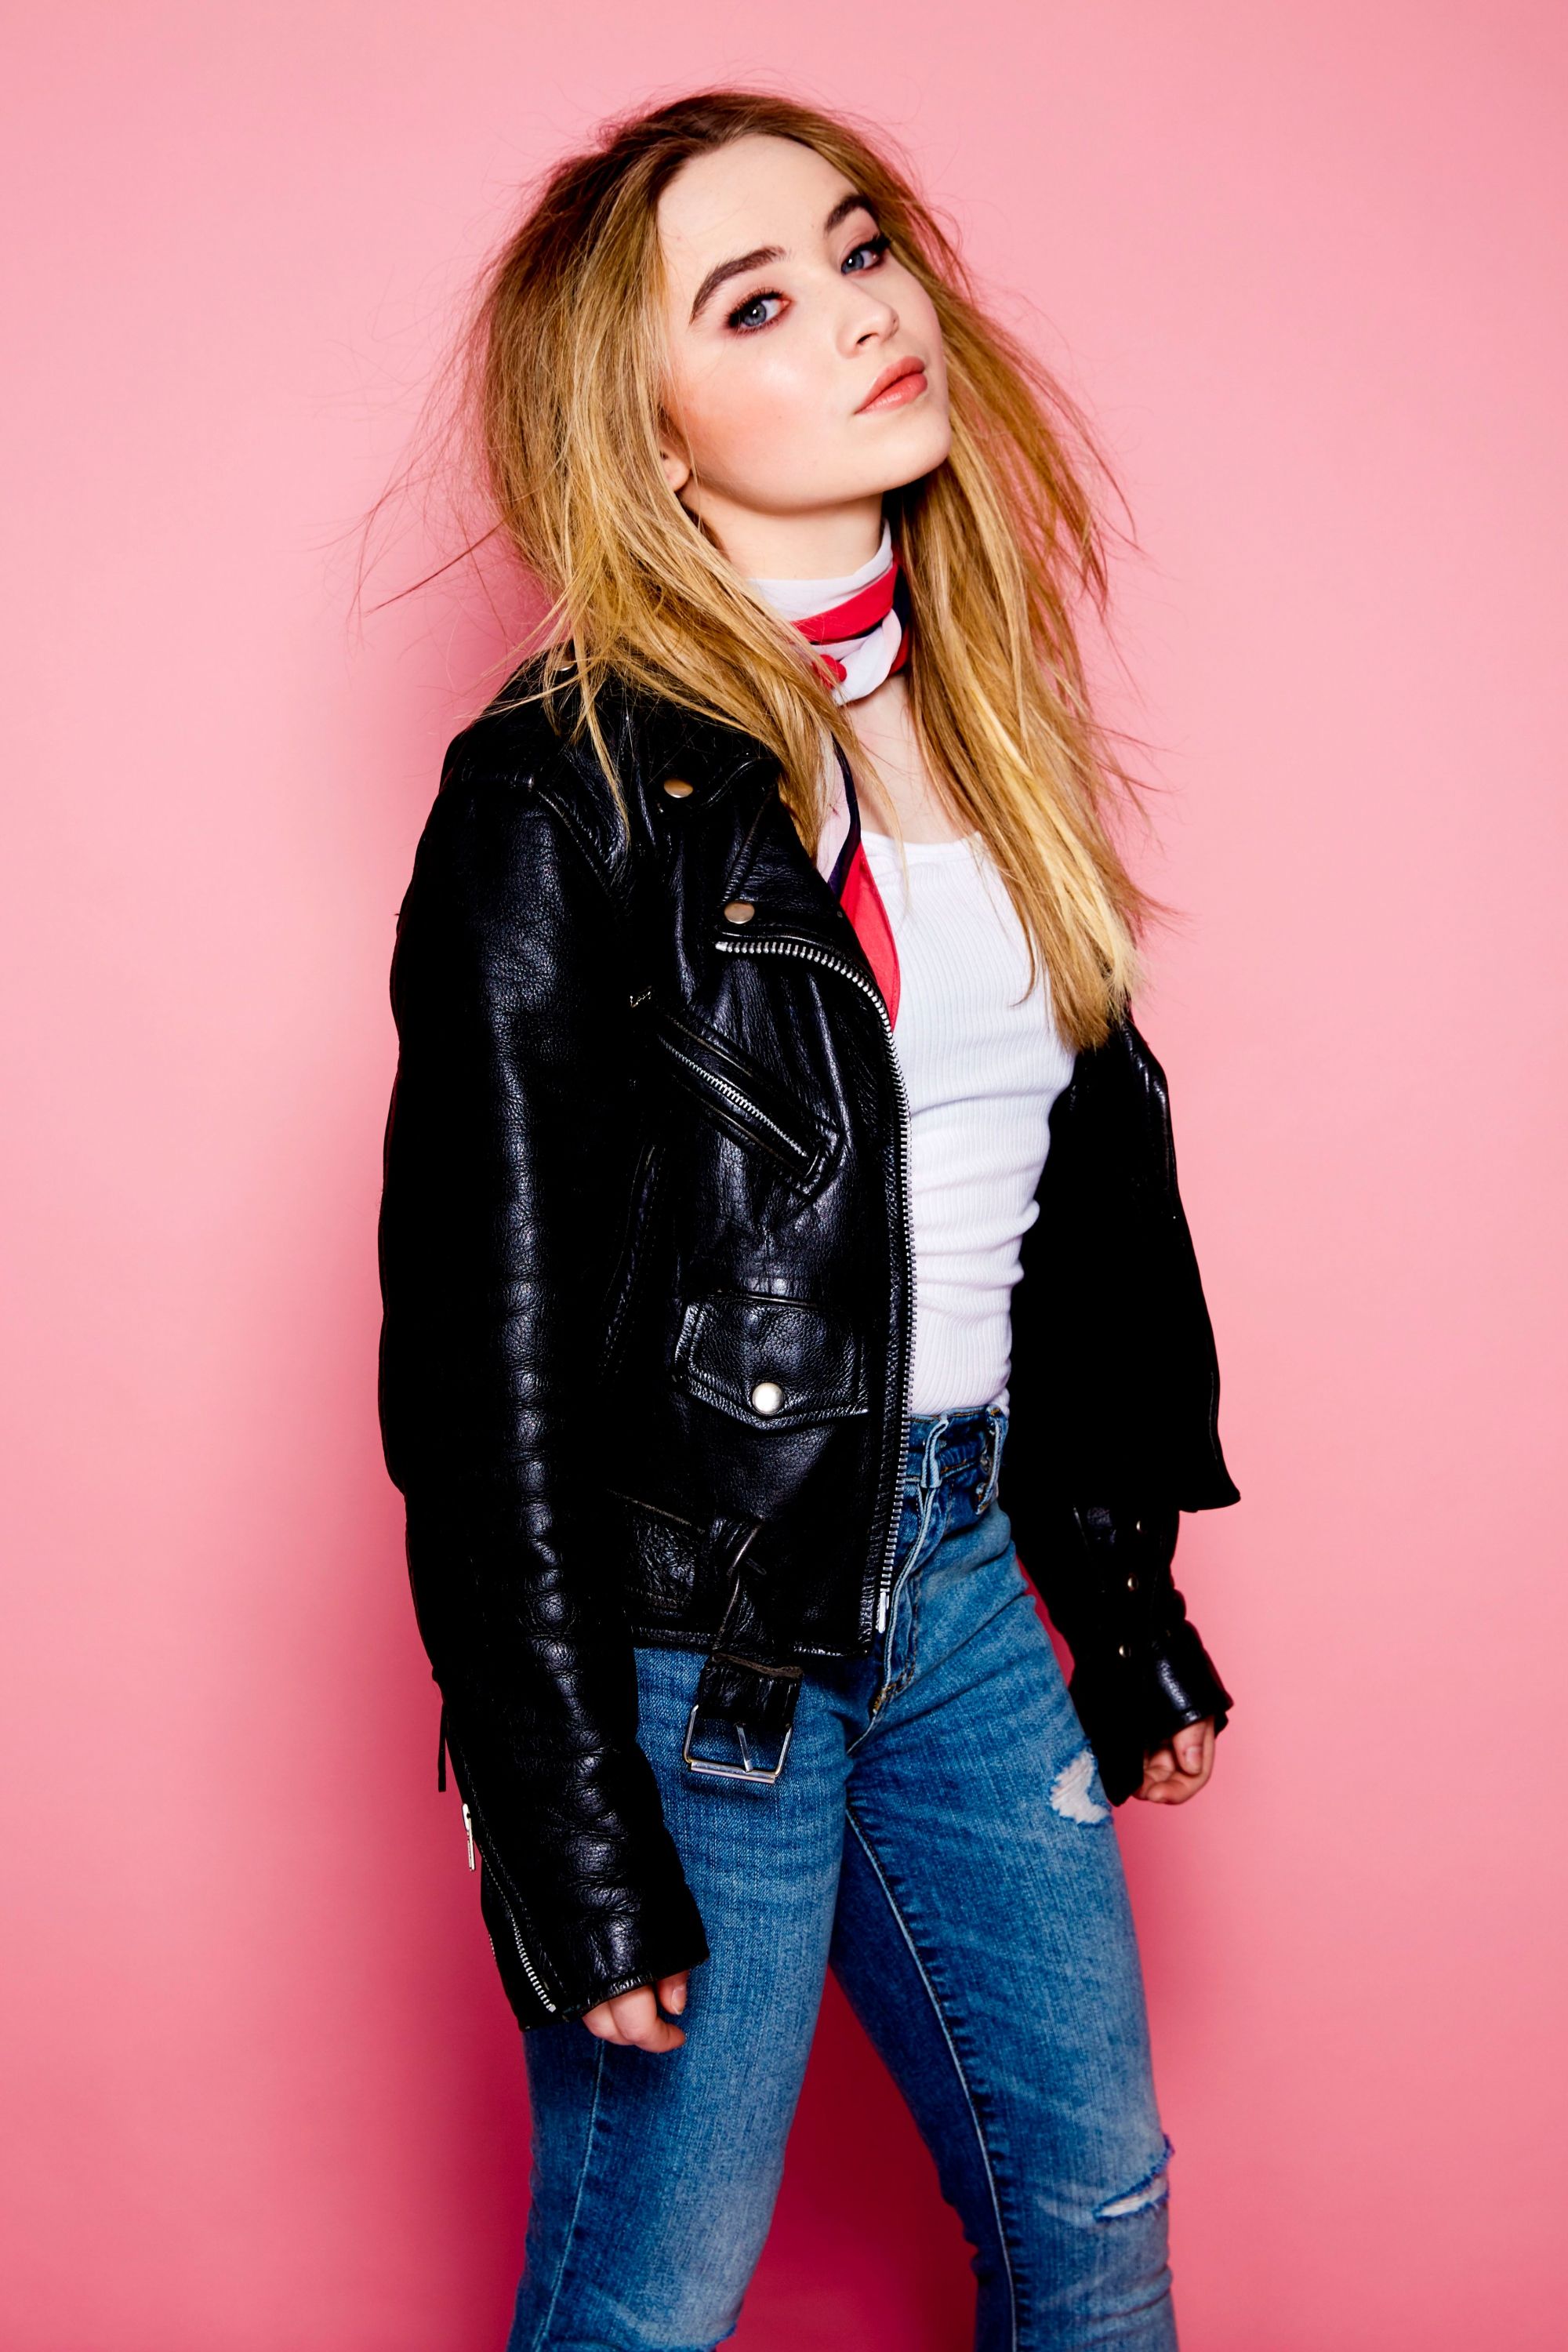 Sabrina Carpenter, women, singer, teen, leather jackets, black jackets, pink background, torn jeans, jacket, black leather jacketx3000 Wallpaper